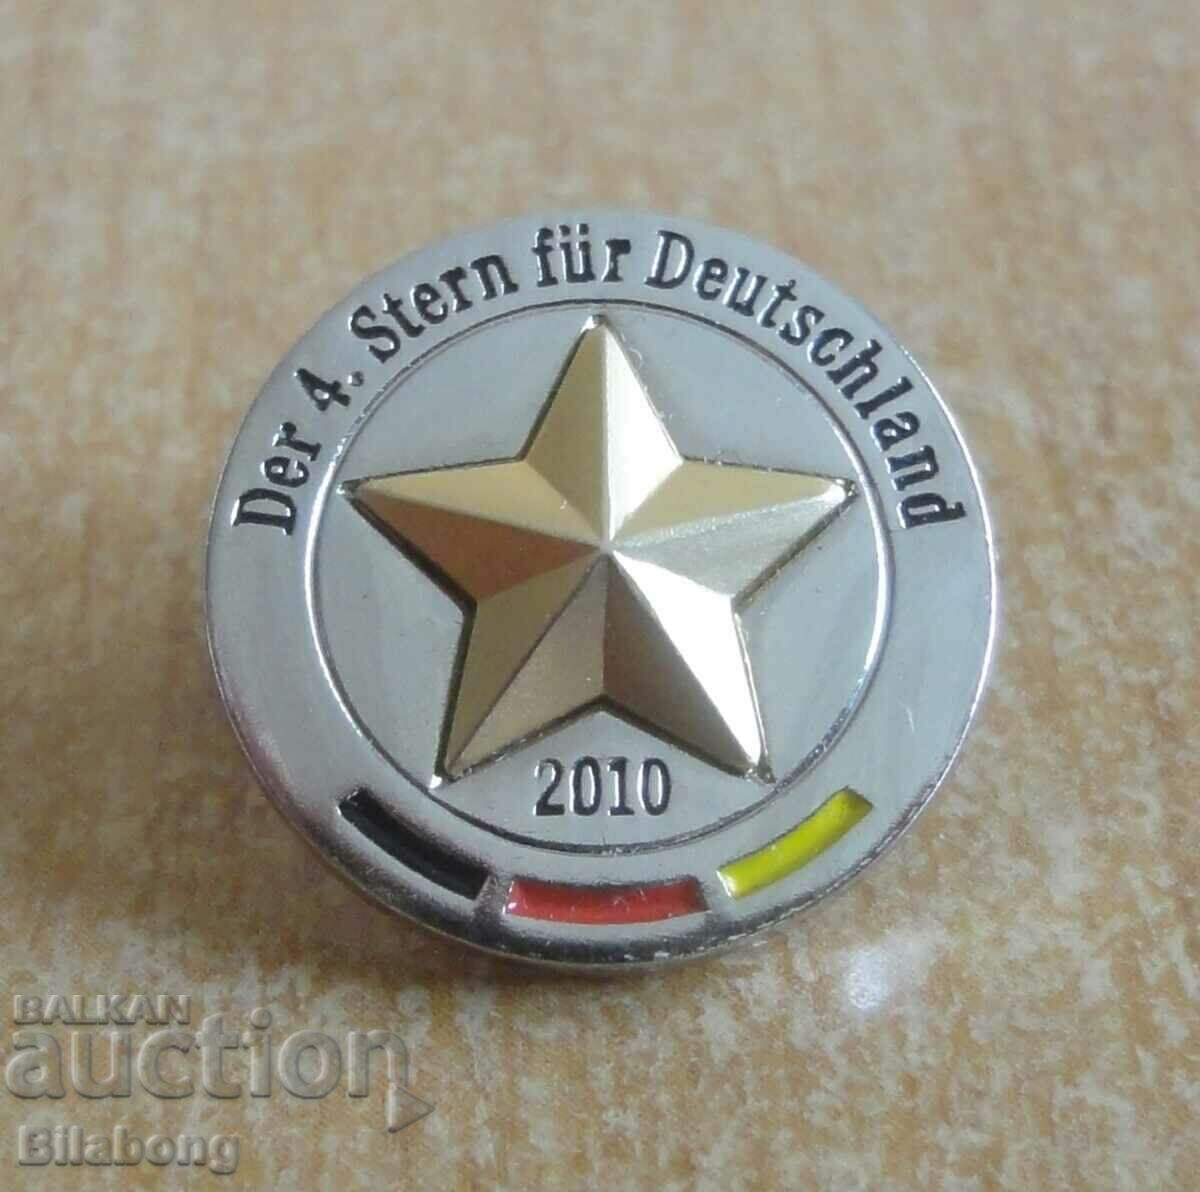 Football Federation Germany 2010 badge